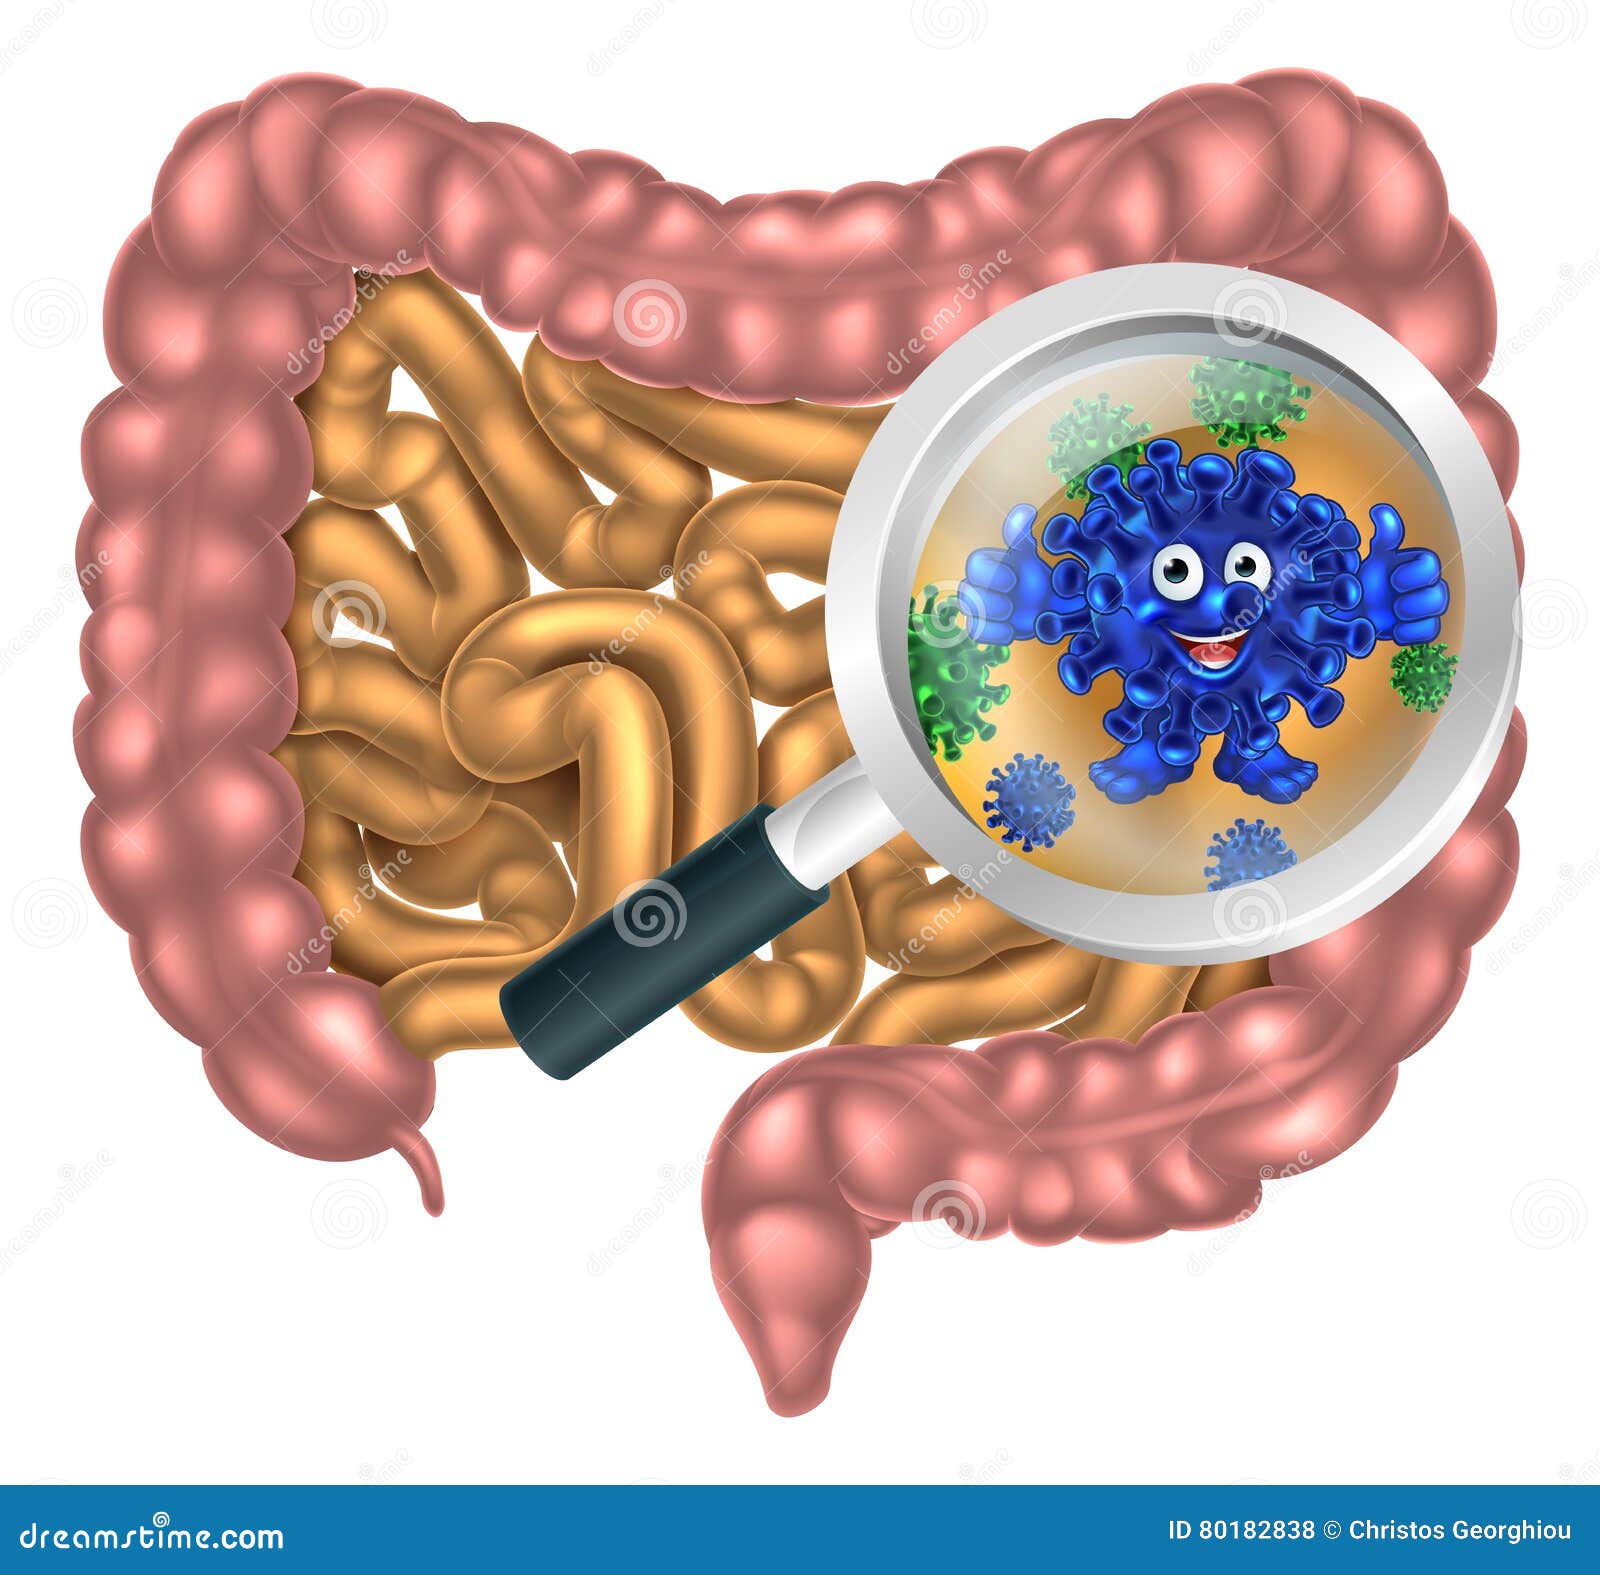 friendly intestine probiotic bacteria mascot